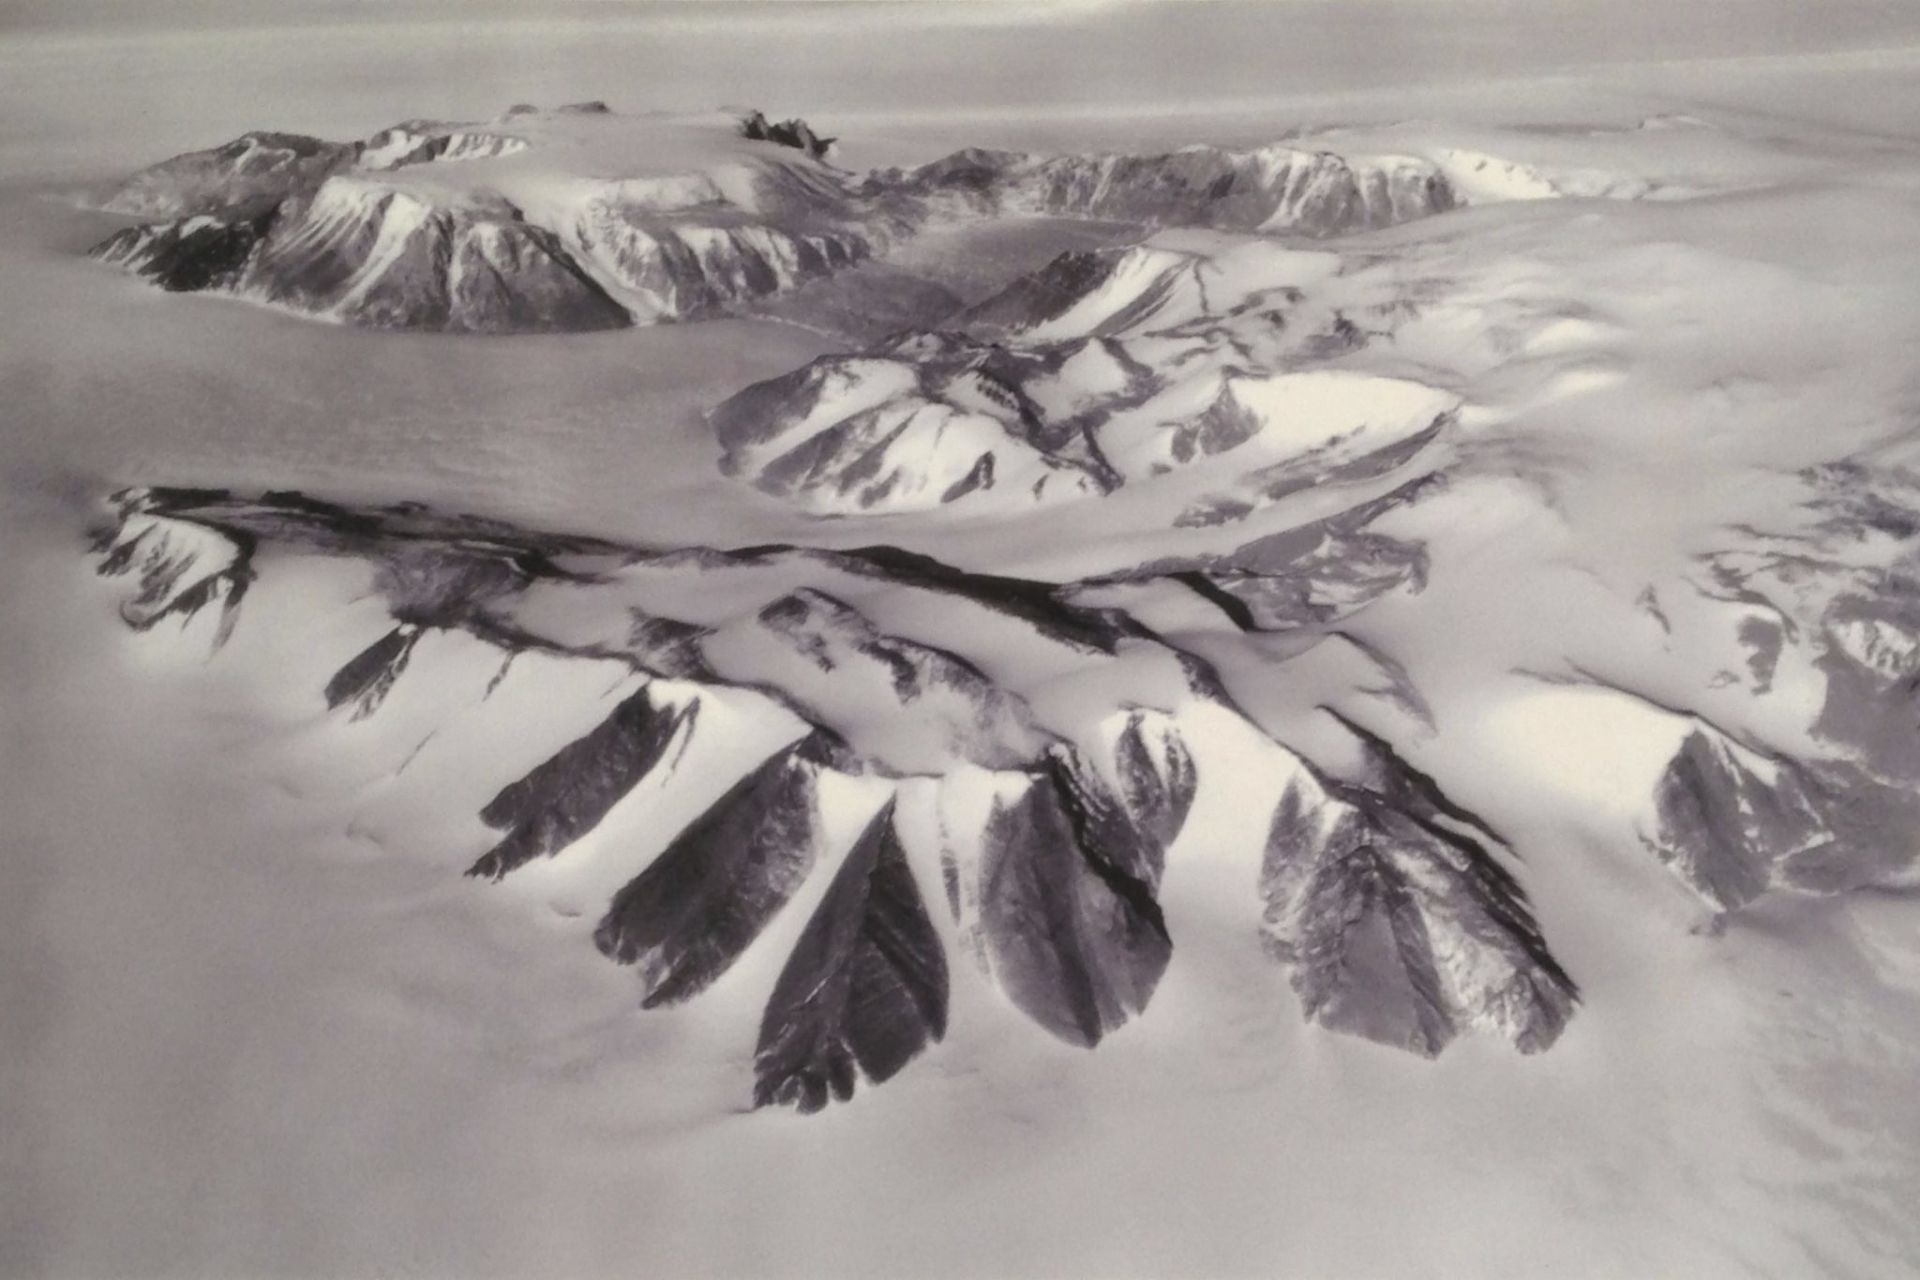 Aerial photo of Greene Ridge, Antarctica